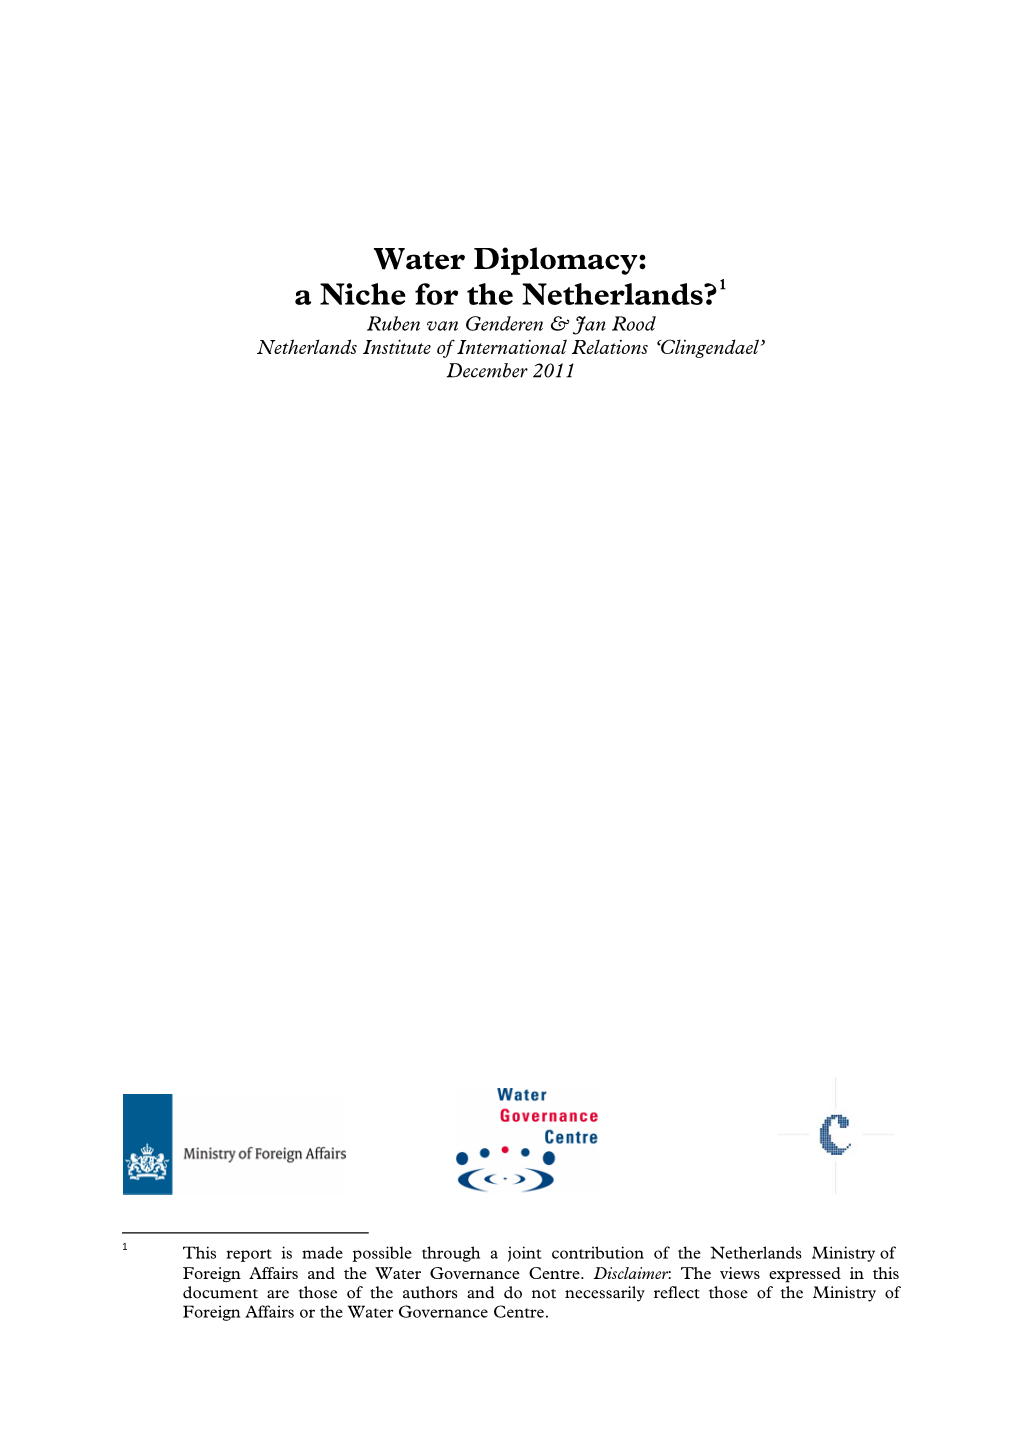 Water Diplomacy: a Niche for the Netherlands?1 Ruben Van Genderen & Jan Rood Netherlands Institute of International Relations ‘Clingendael’ December 2011